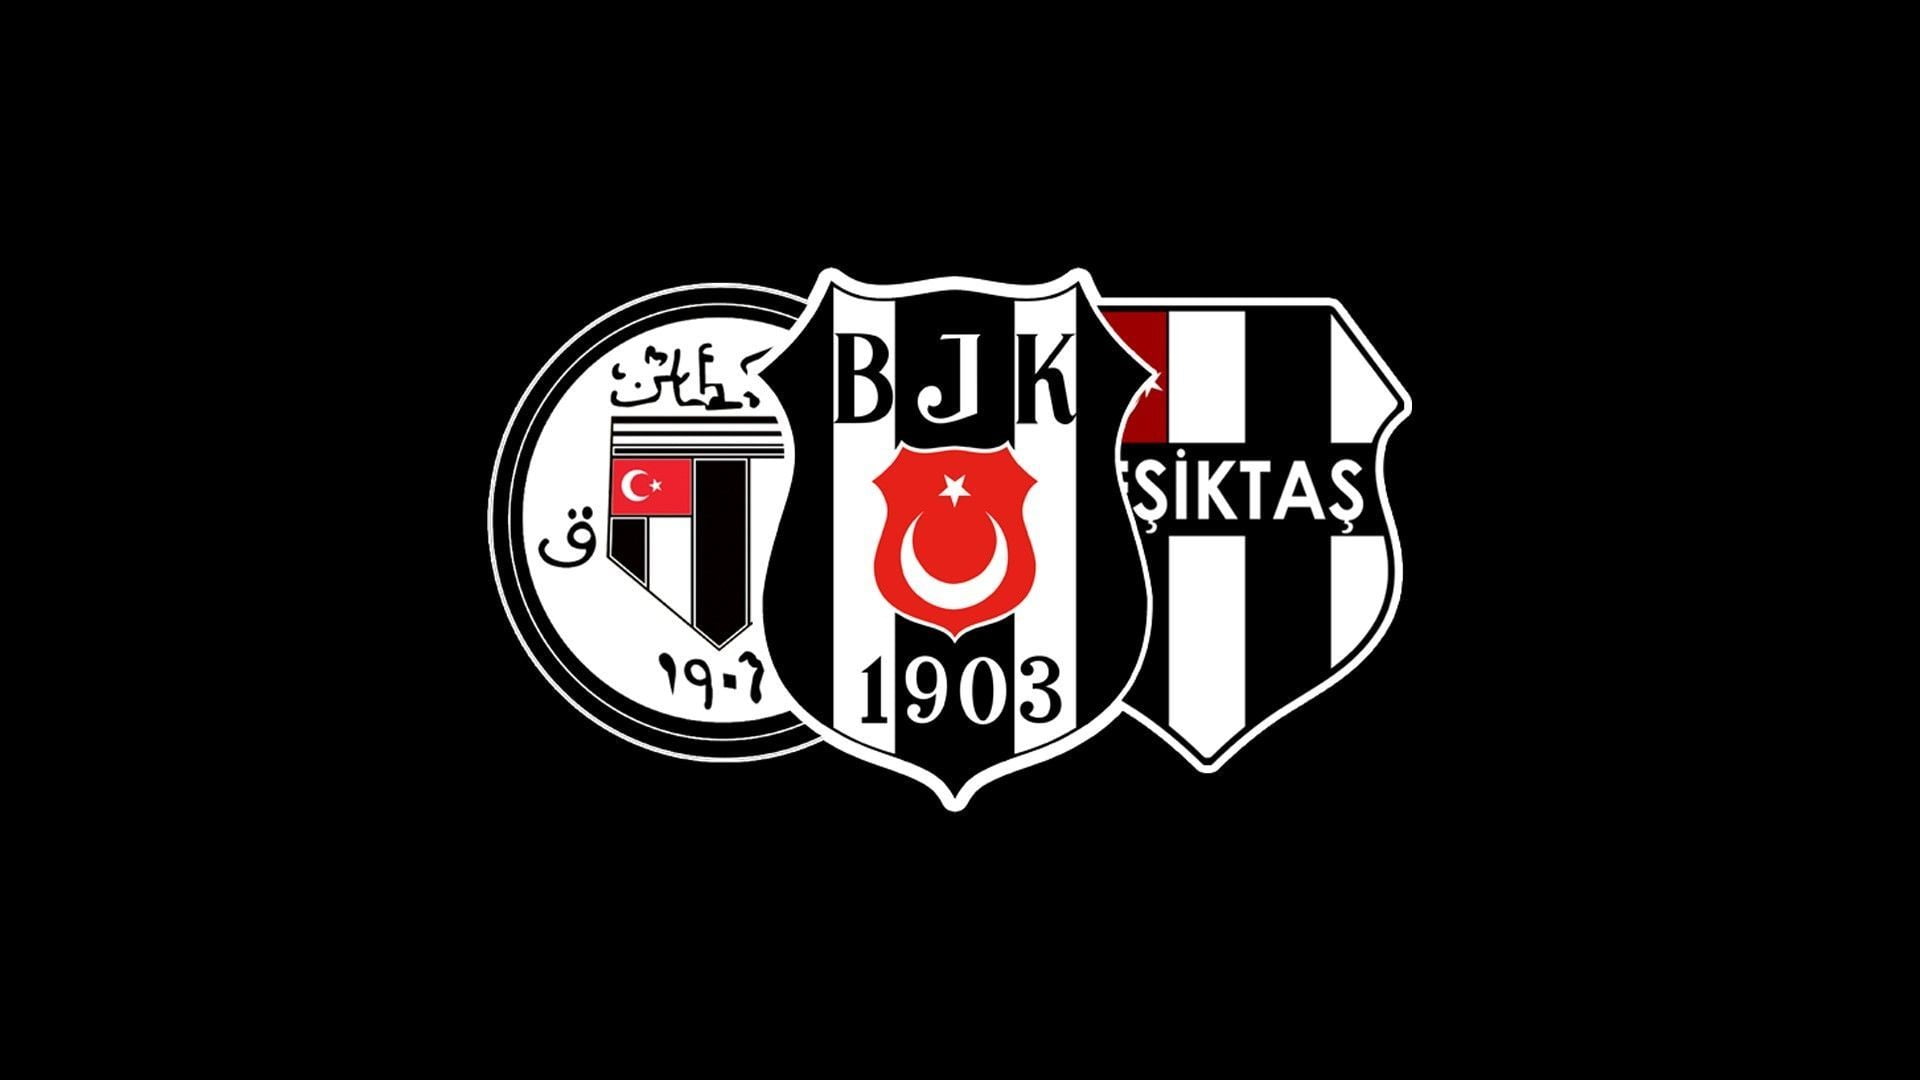 besiktas-j-k-soccer-clubs-soccer-logo-wallpaper.jpg